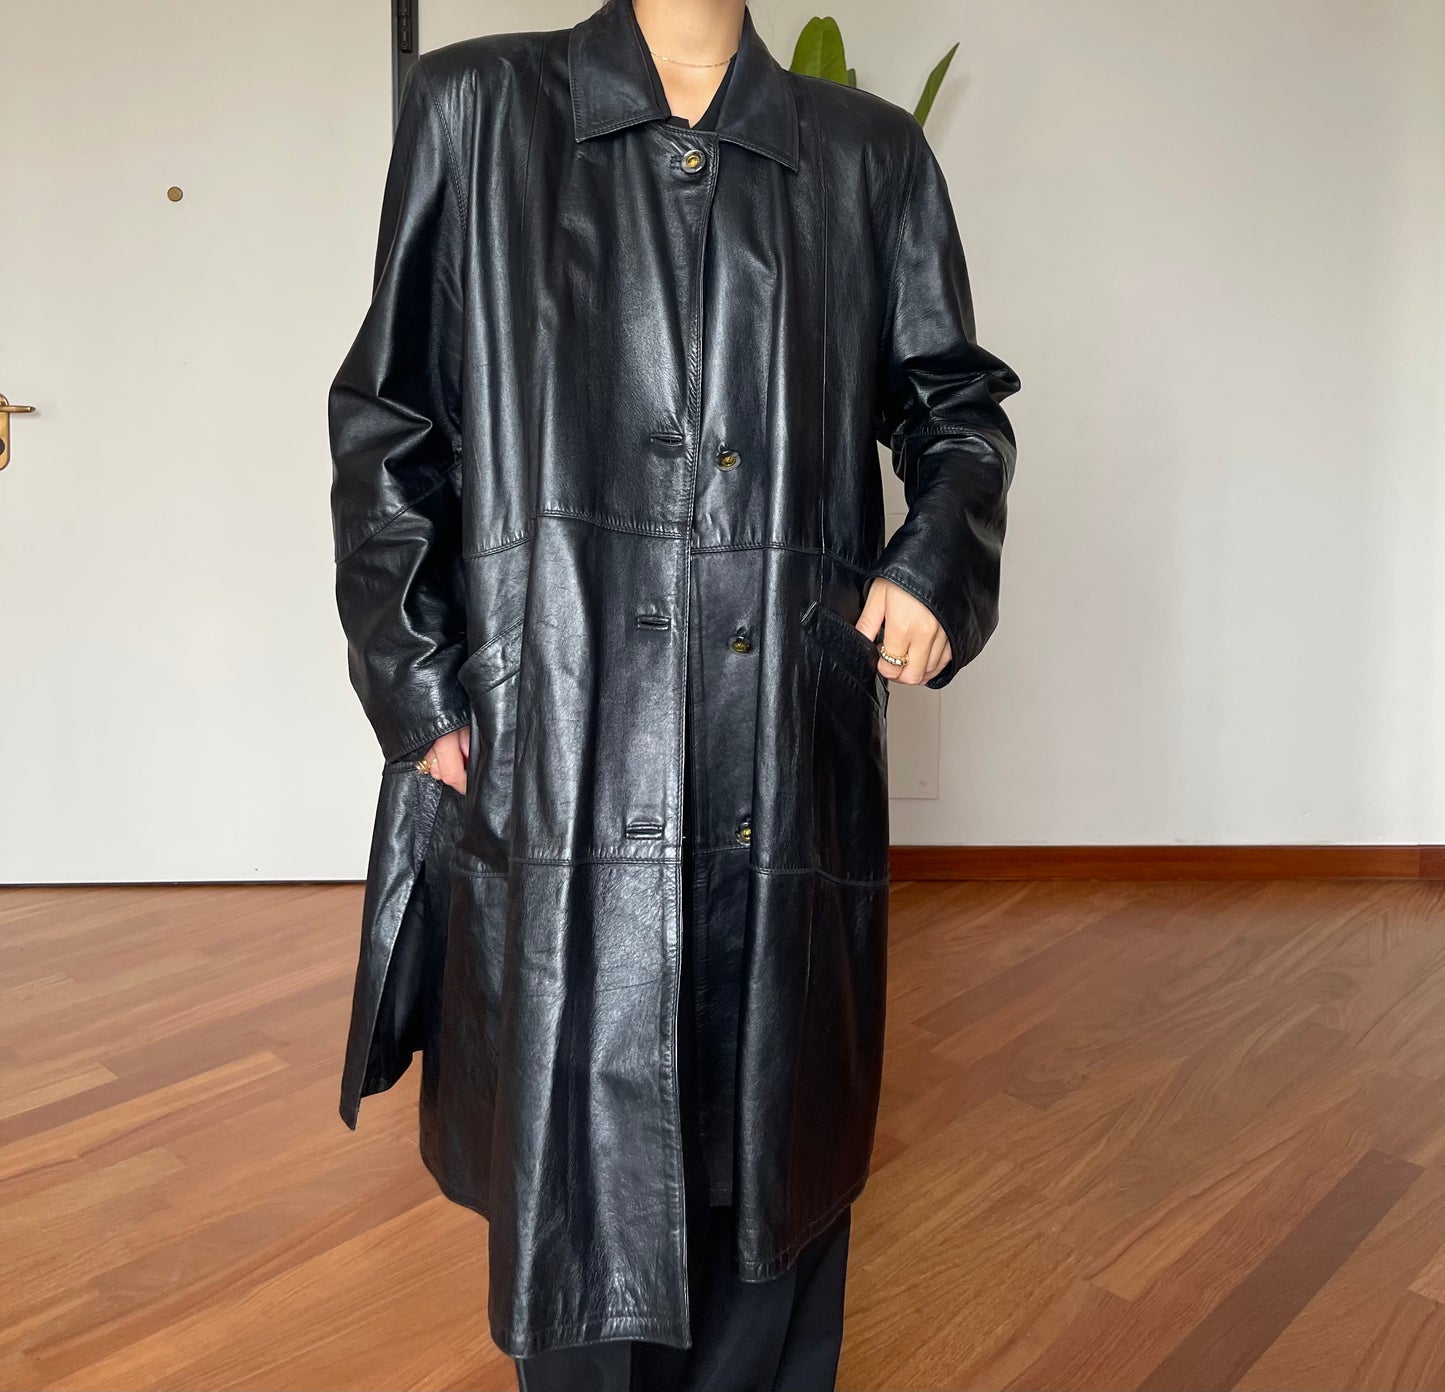 Indispensabile leather coat